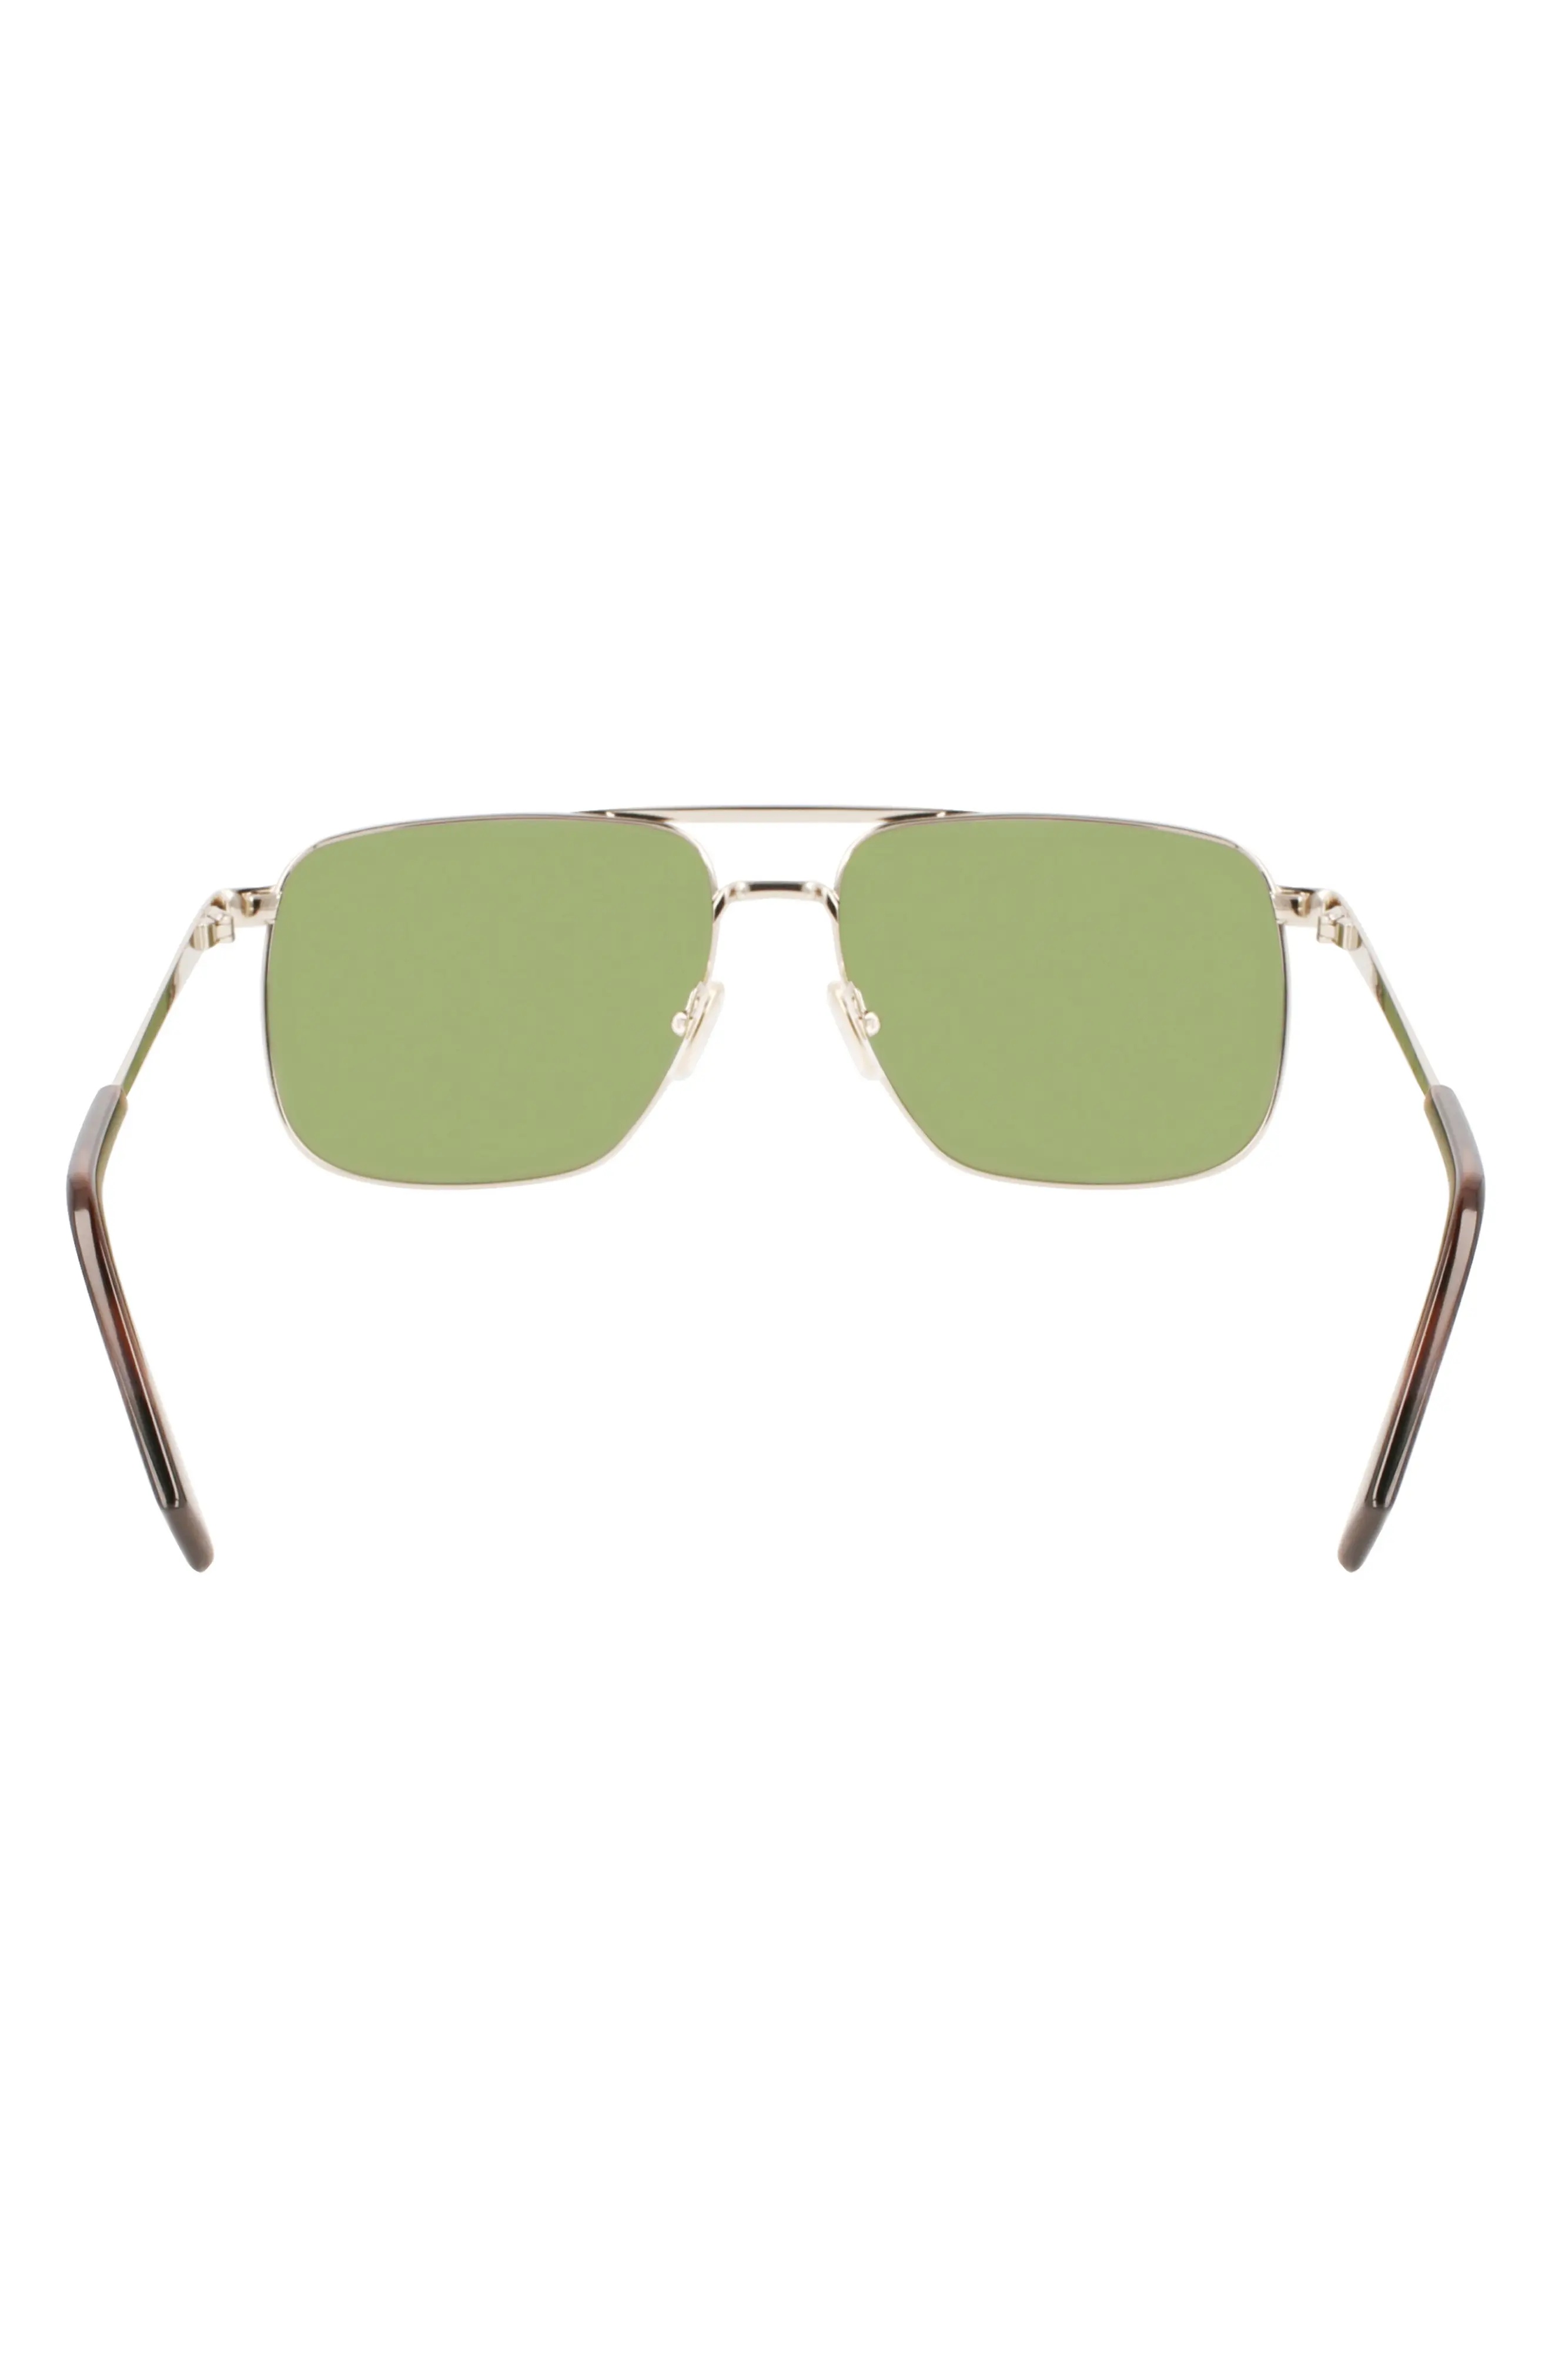 JL 58mm Rectangular Sunglasses in Gold /Green - 4